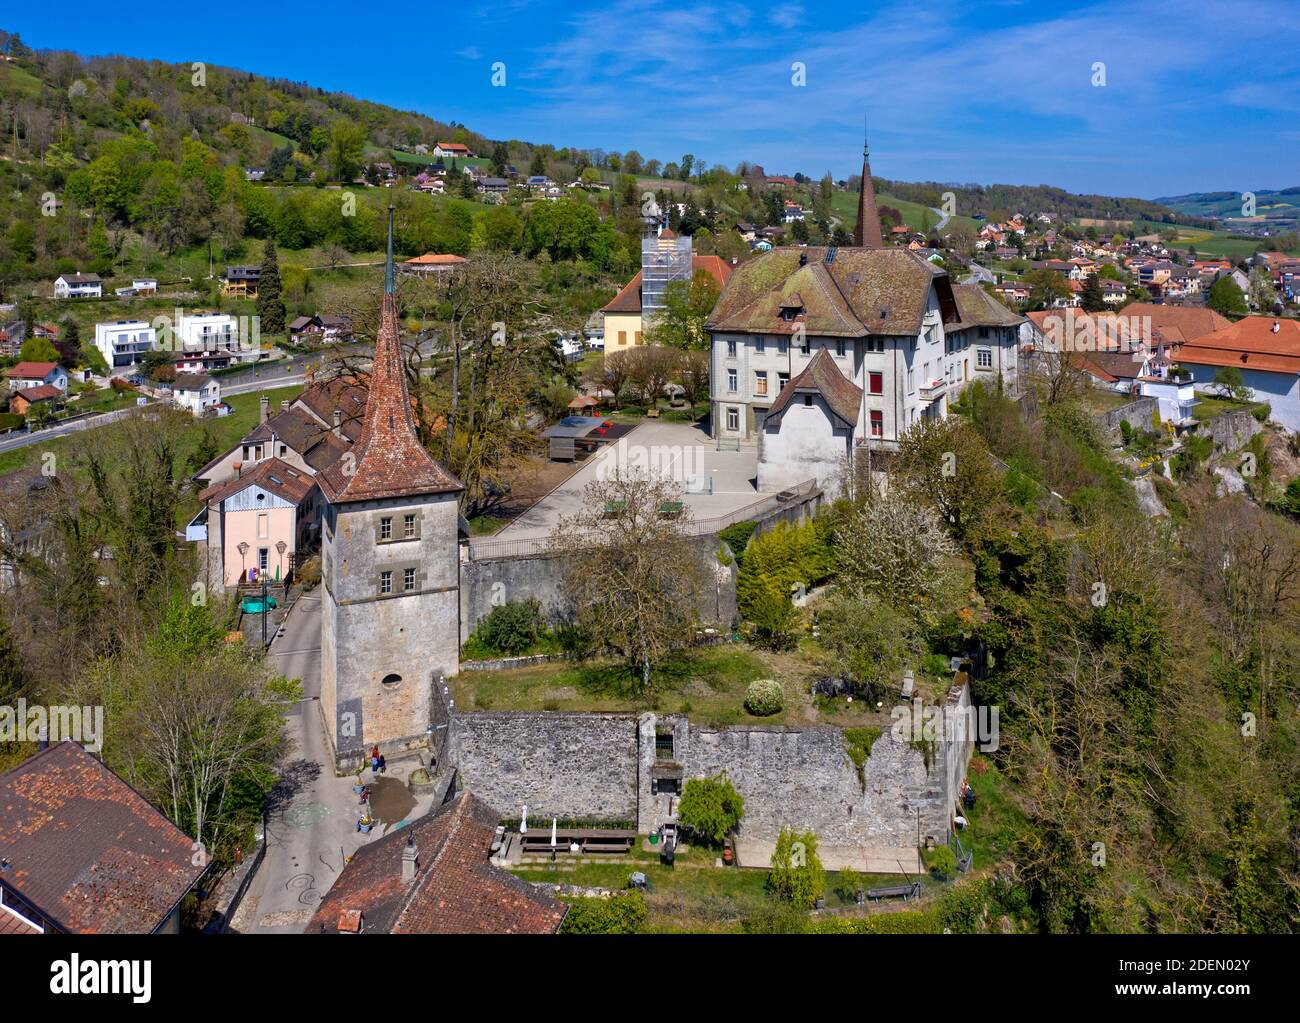 Schloss Carrouge, Chateau de Carrouge, mit mittelalterlichem Wachturm, Oberstadt Le Bourg, Moudon, Kanton Waadt, Schweiz / Carrouge Castle, Chateau de Stock Photo